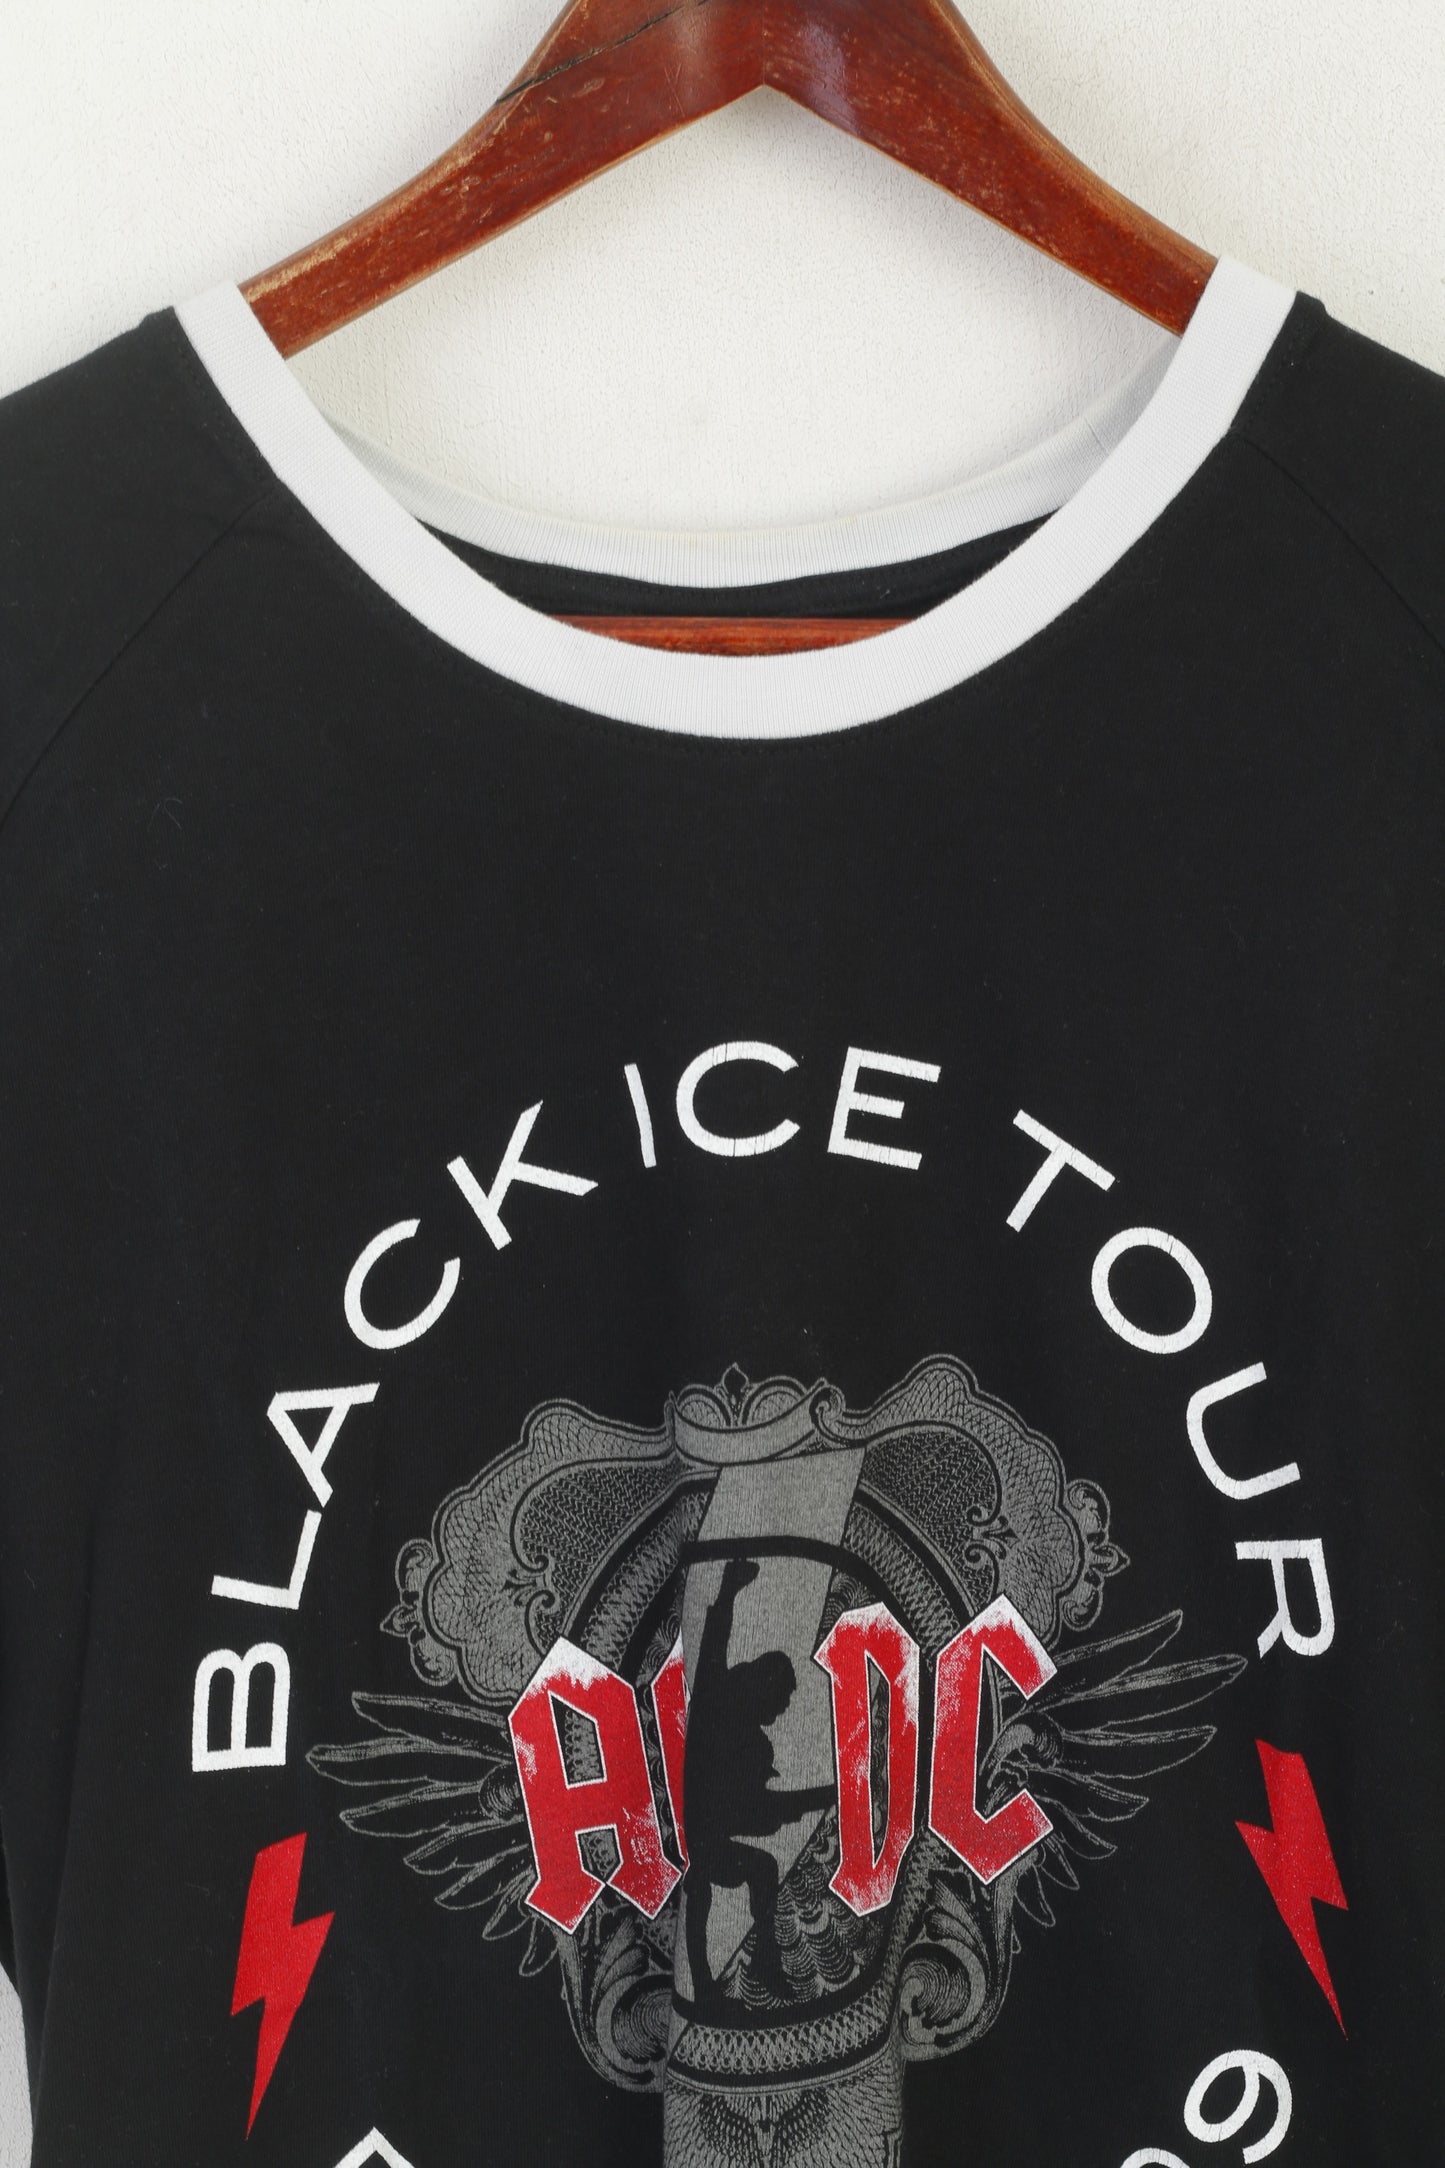 Starworld Men XL (L) Shirt Black Cotton  AC DC Europe 2009 Black Ice Tour Top